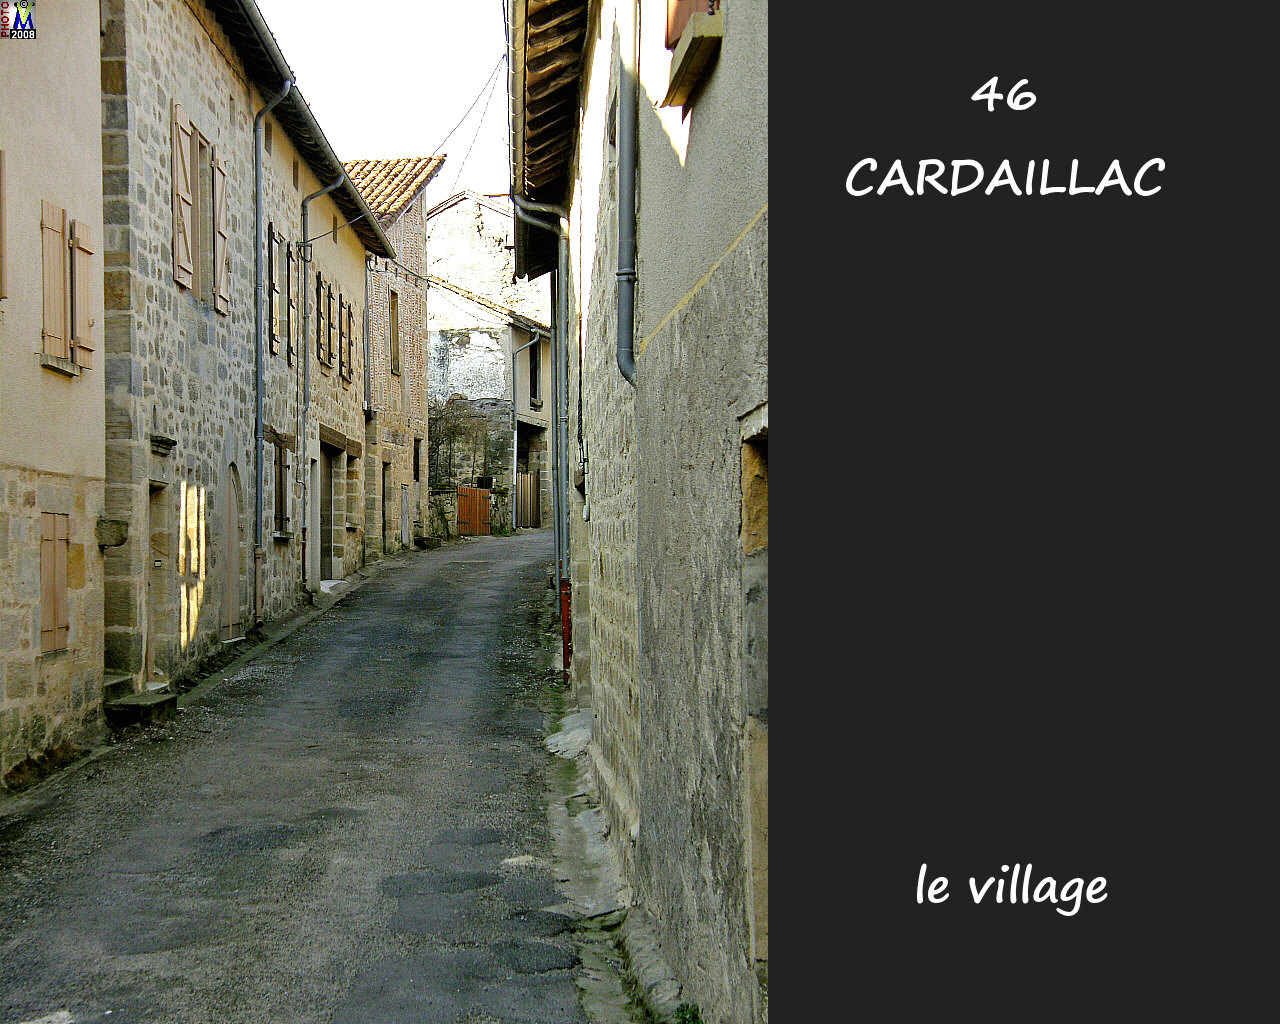 46CARDAILLAC_village_218.jpg